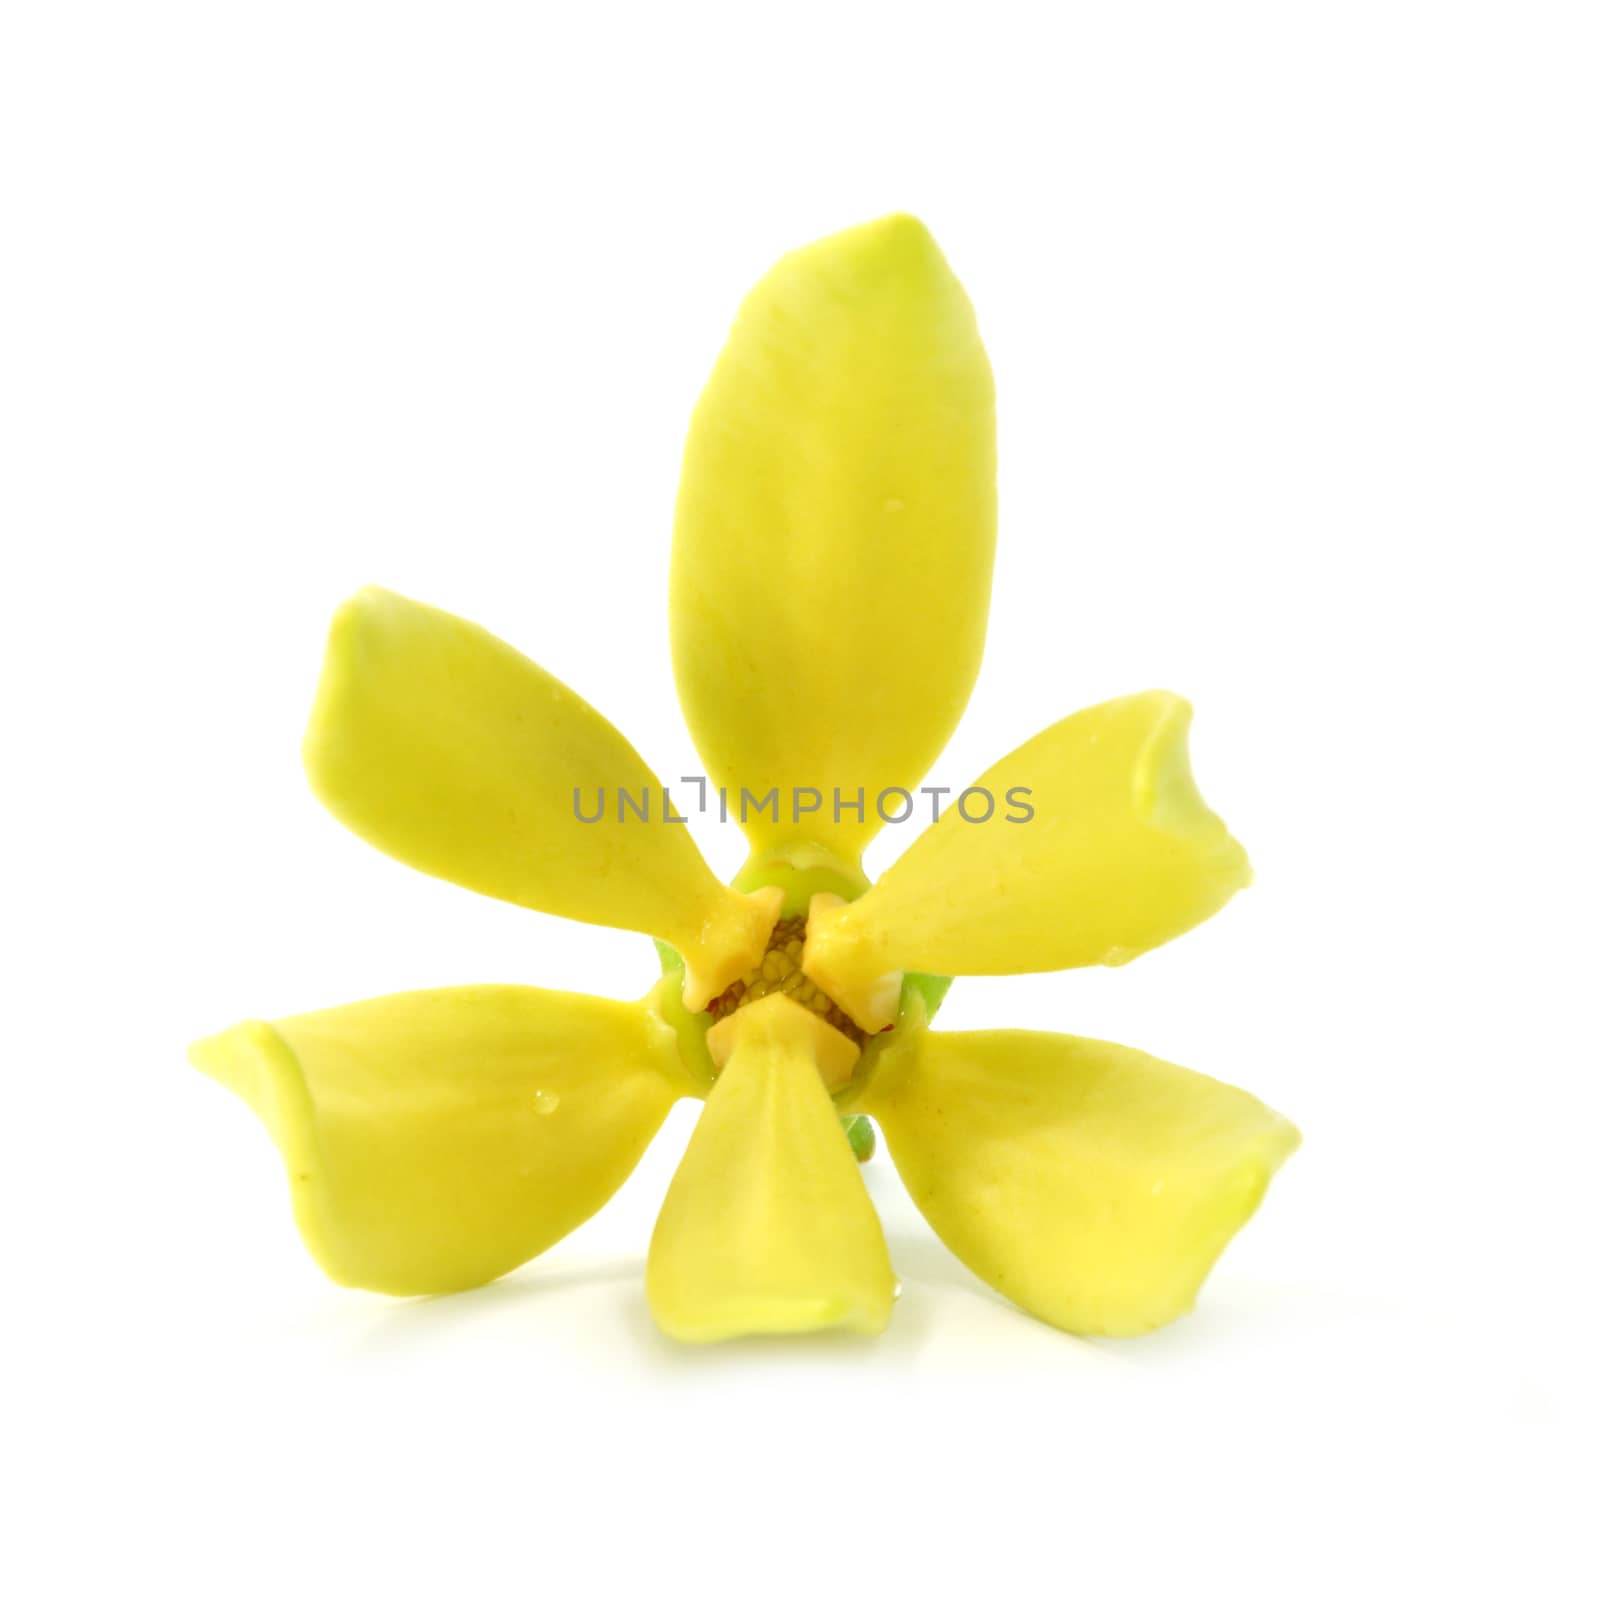 Yellow flower of Bhandari on white background., Scientific name: by Noppharat_th